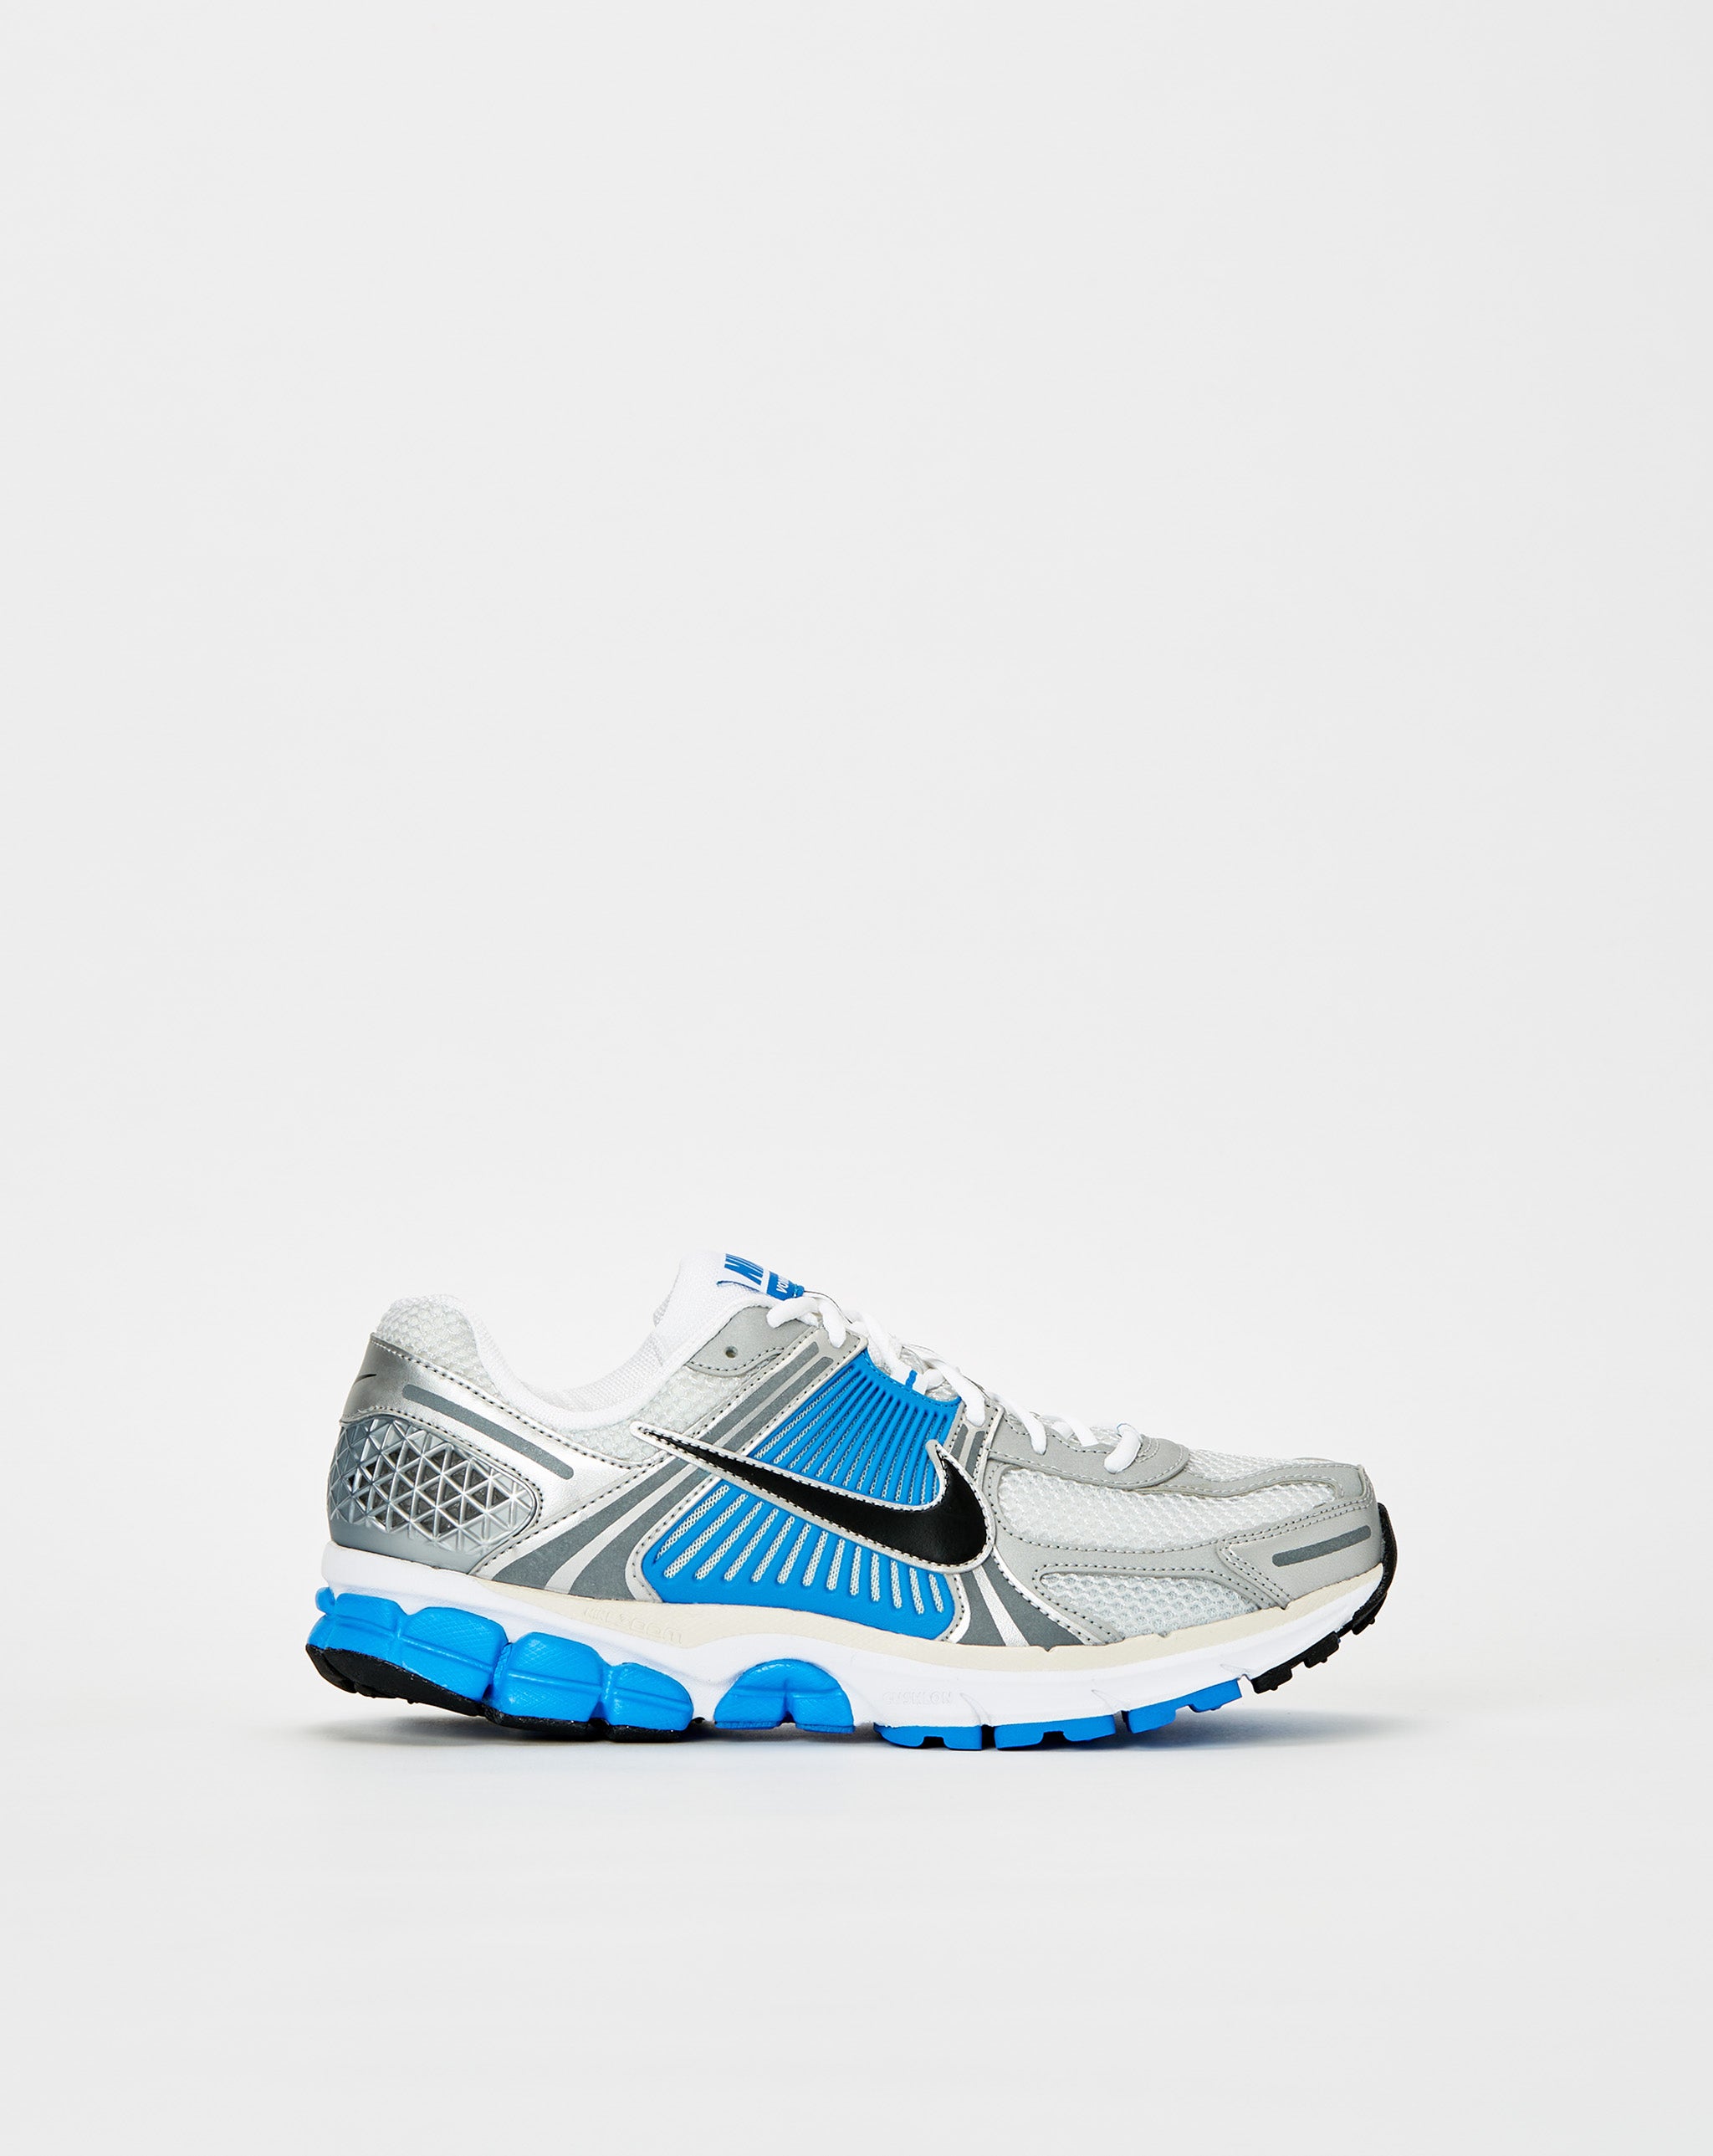 Nike Nike Air Max 1 SC Jewel Atomic Teal Arriving to Retailers  - Cheap Urlfreeze Jordan outlet